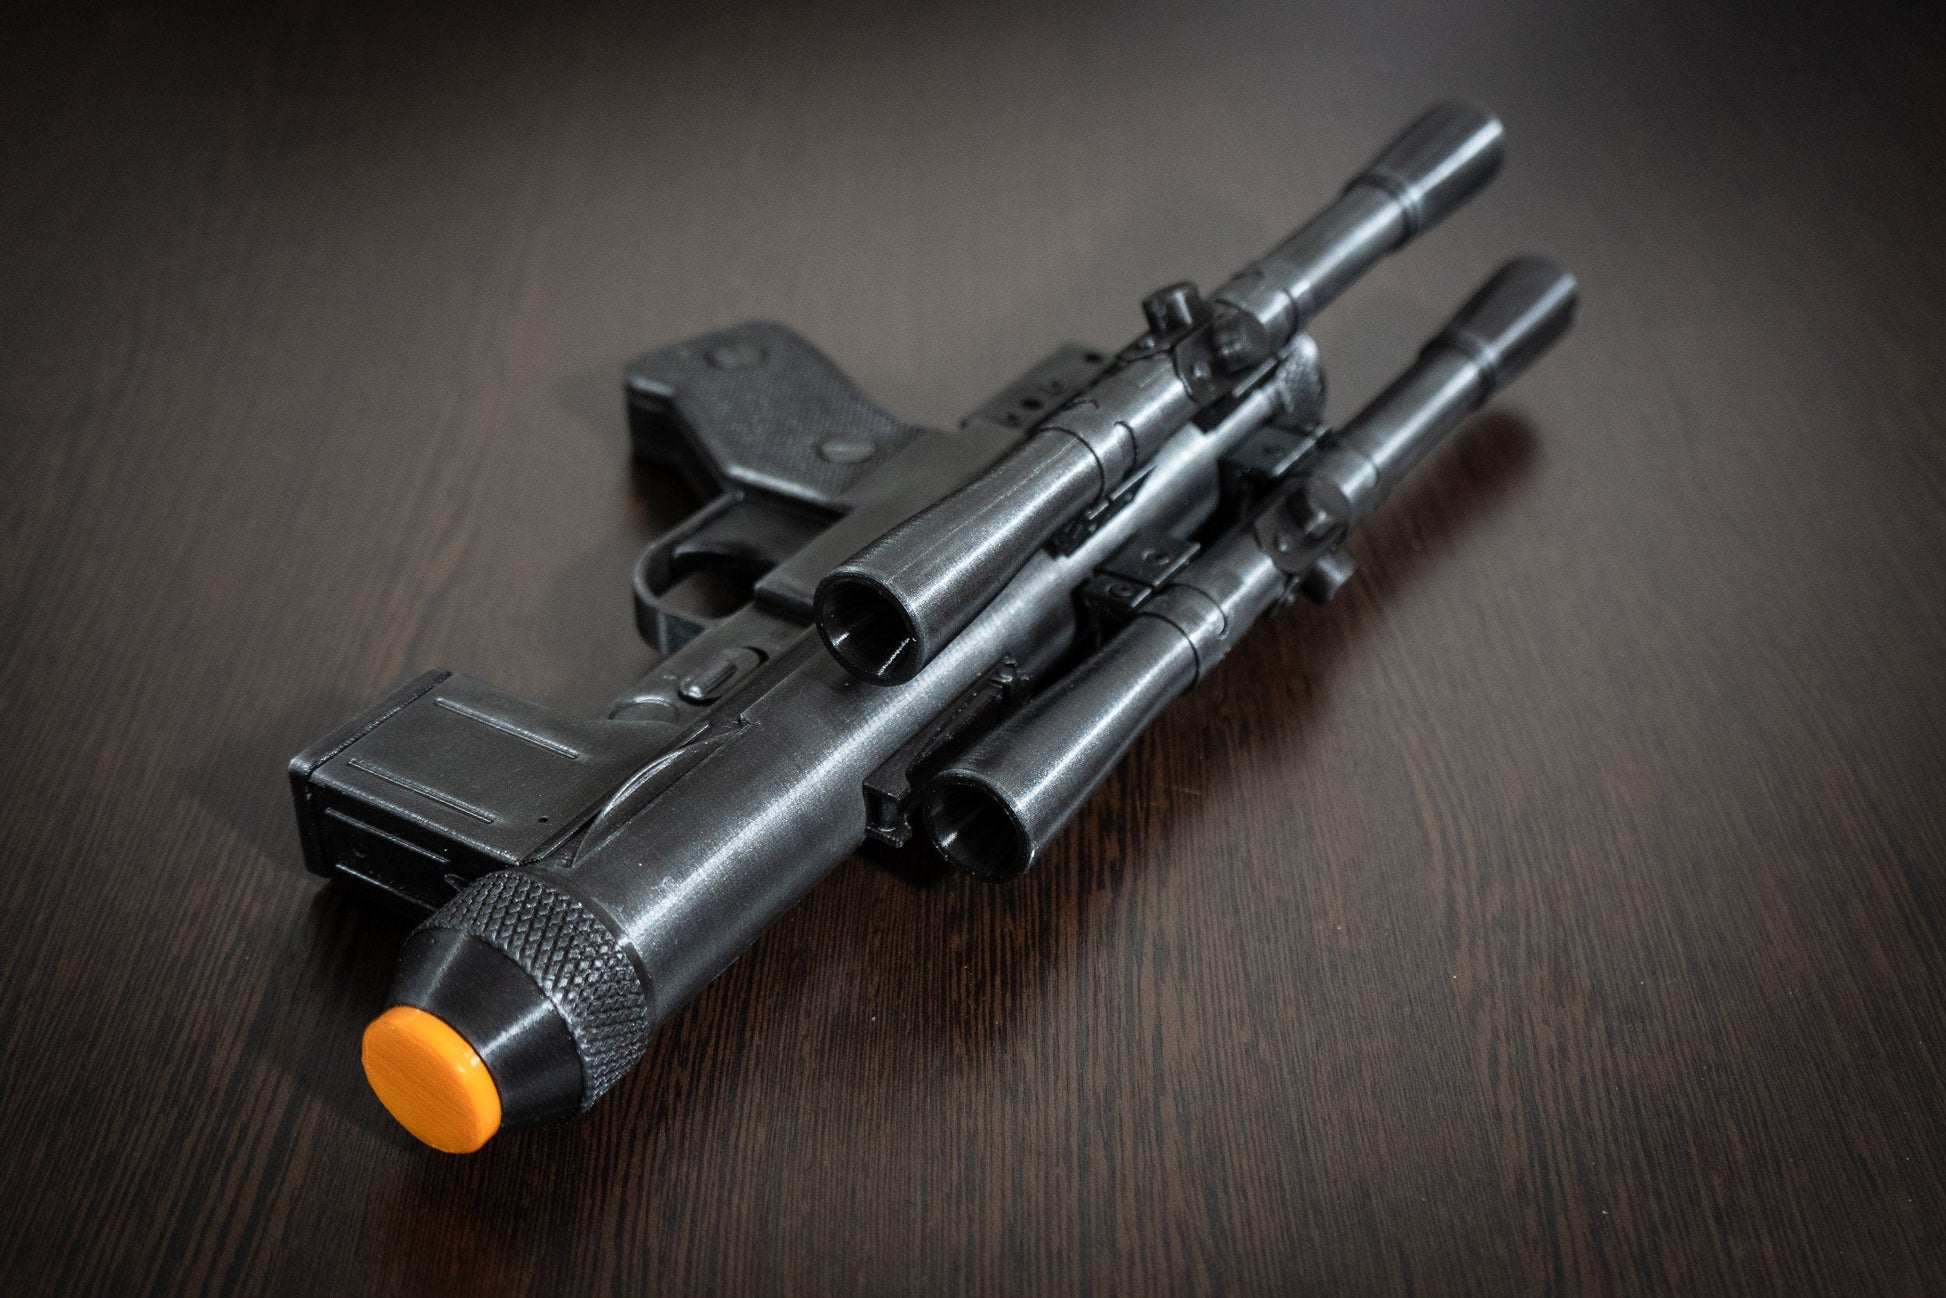 SE-14C blaster from Star Wars | Cosplay Prop Replica blaster - 3DPrintProps